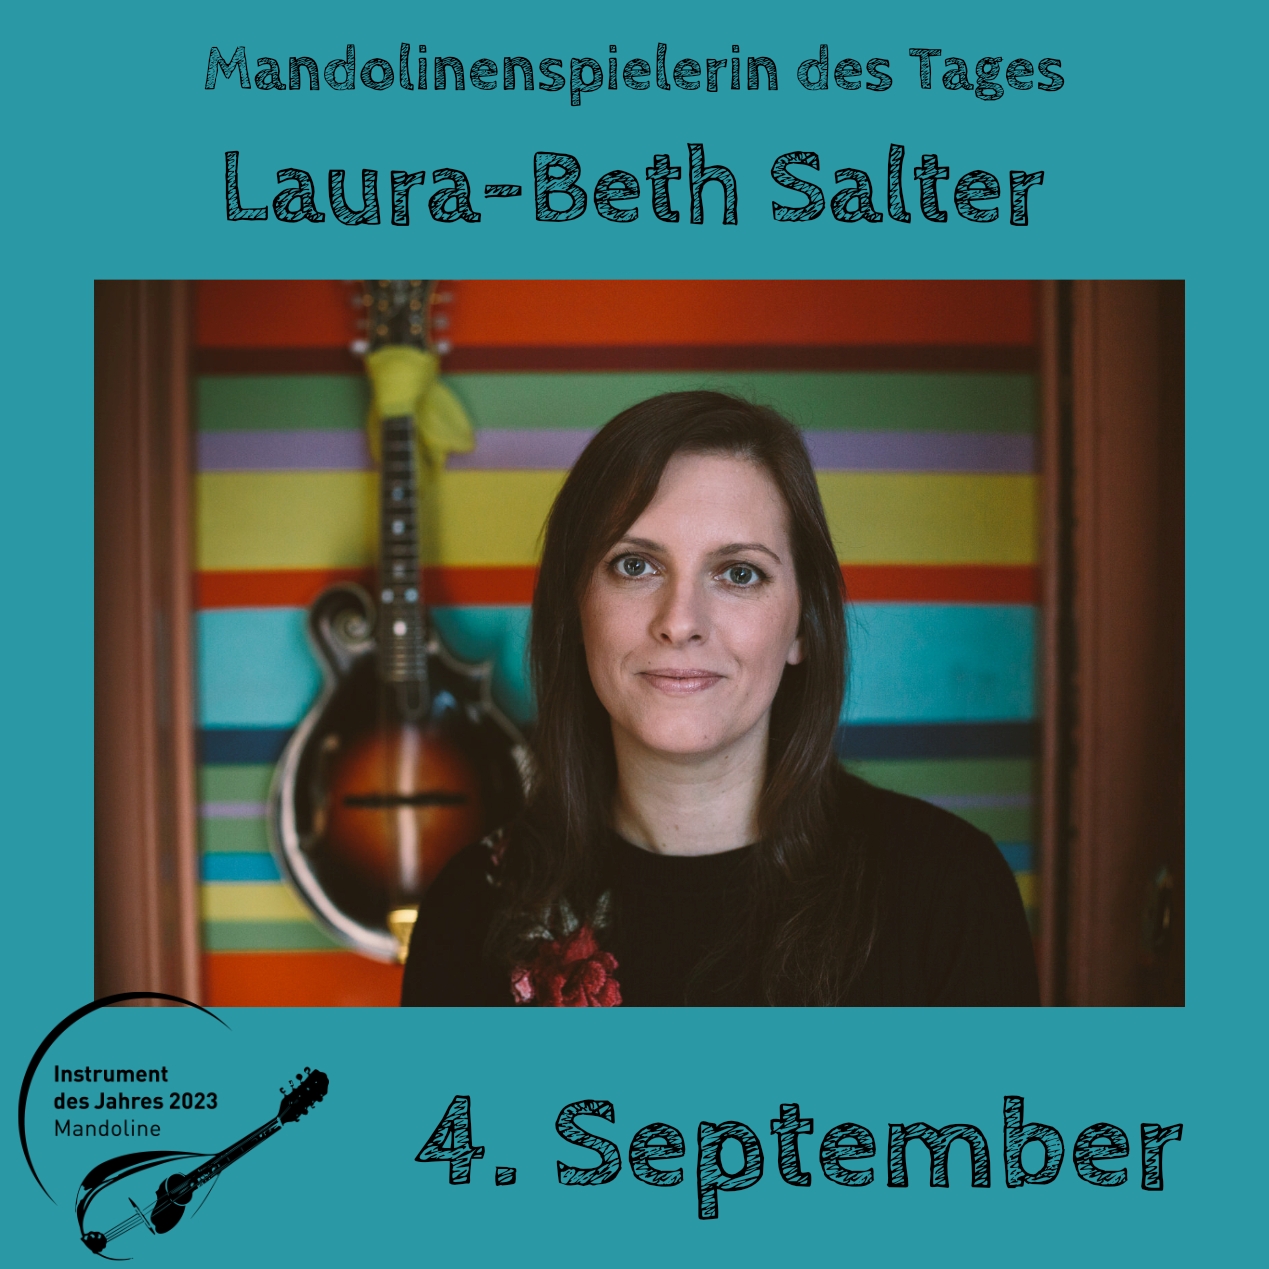 Laura-Beth Salter Mandoline Instrument des Jahres 2023 Mandolinenspieler Mandolinenspielerin des Tages